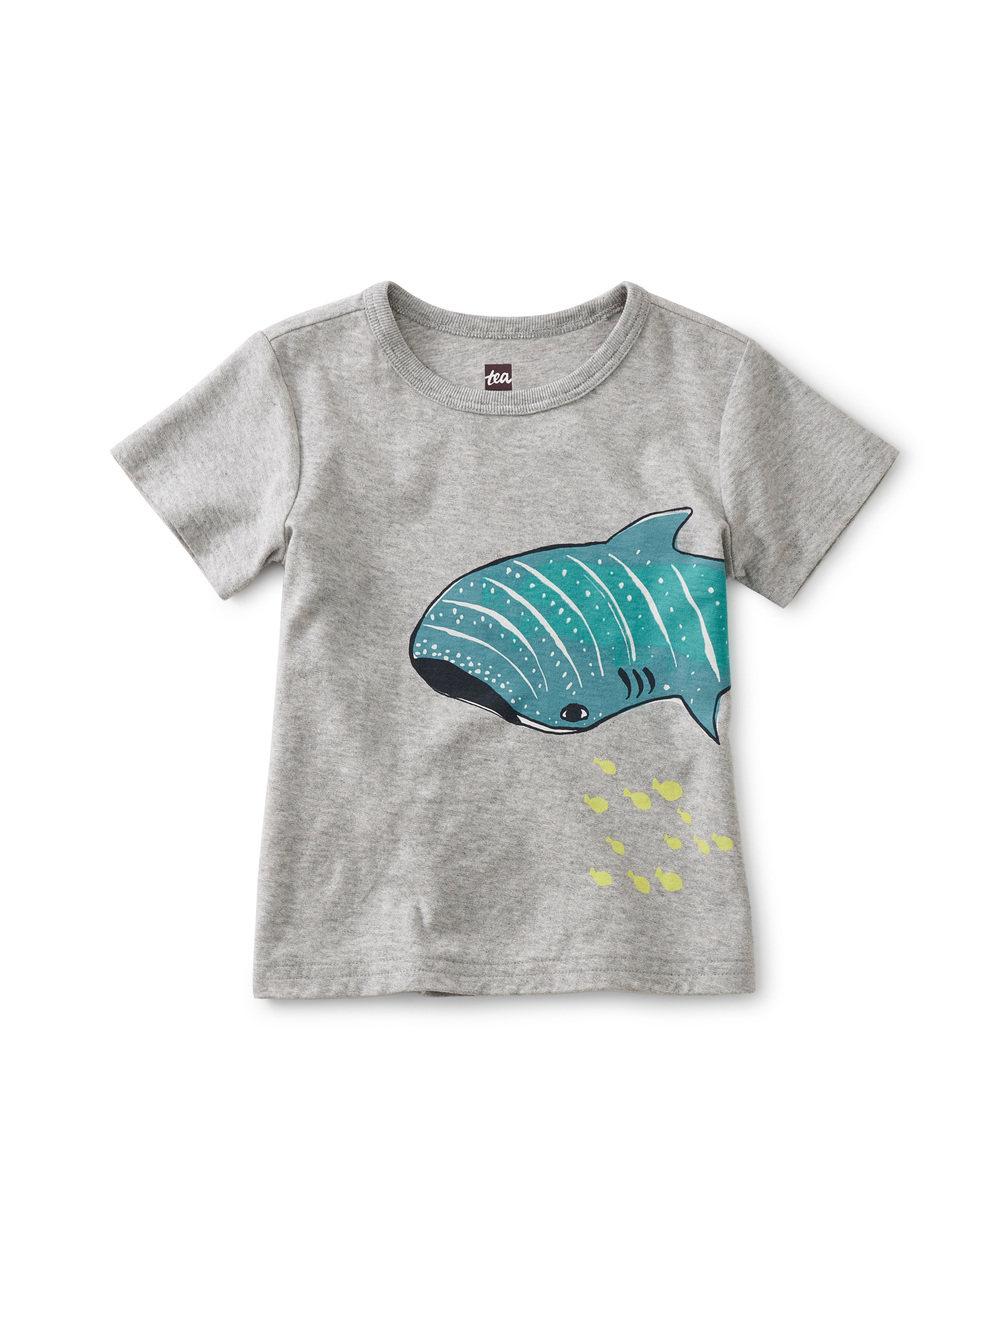 Whale Shark Baby Graphic Tee